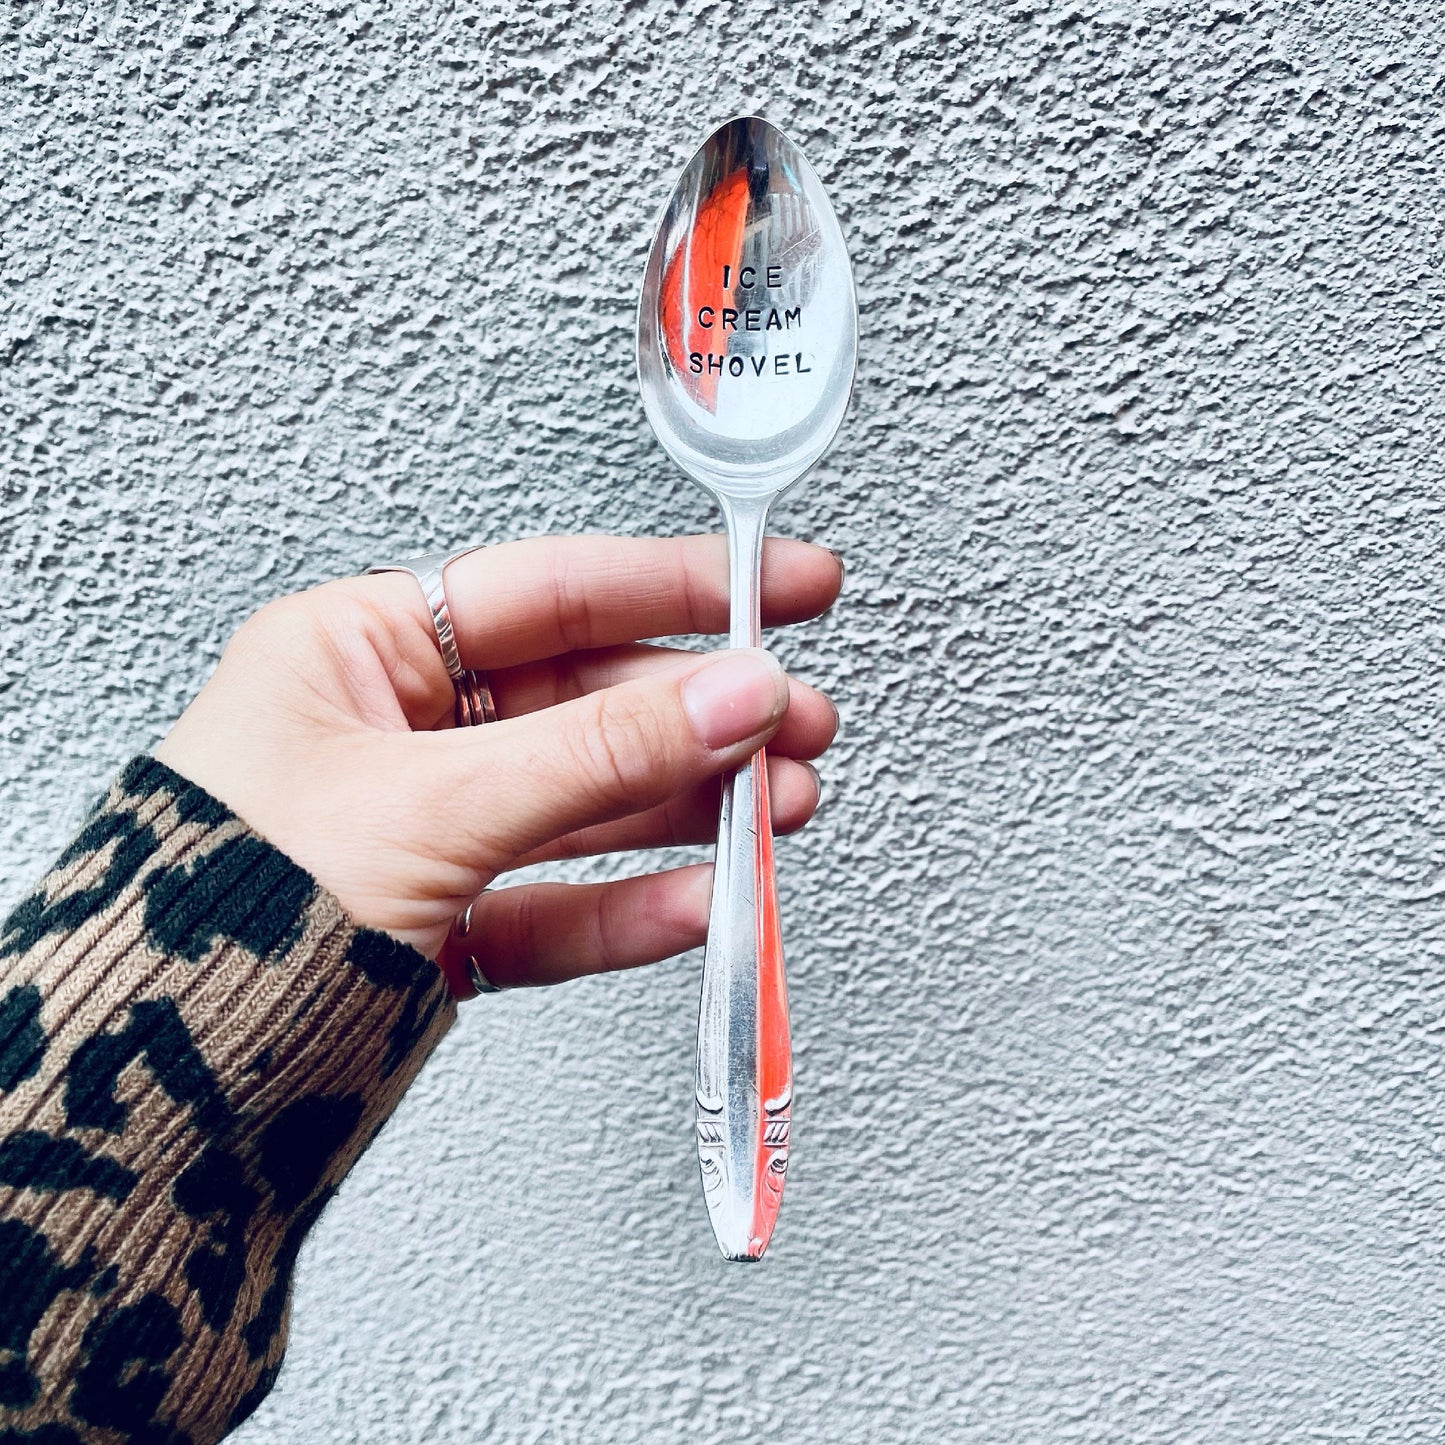 Ice Cream Shovel - Vintage Dessert Spoon